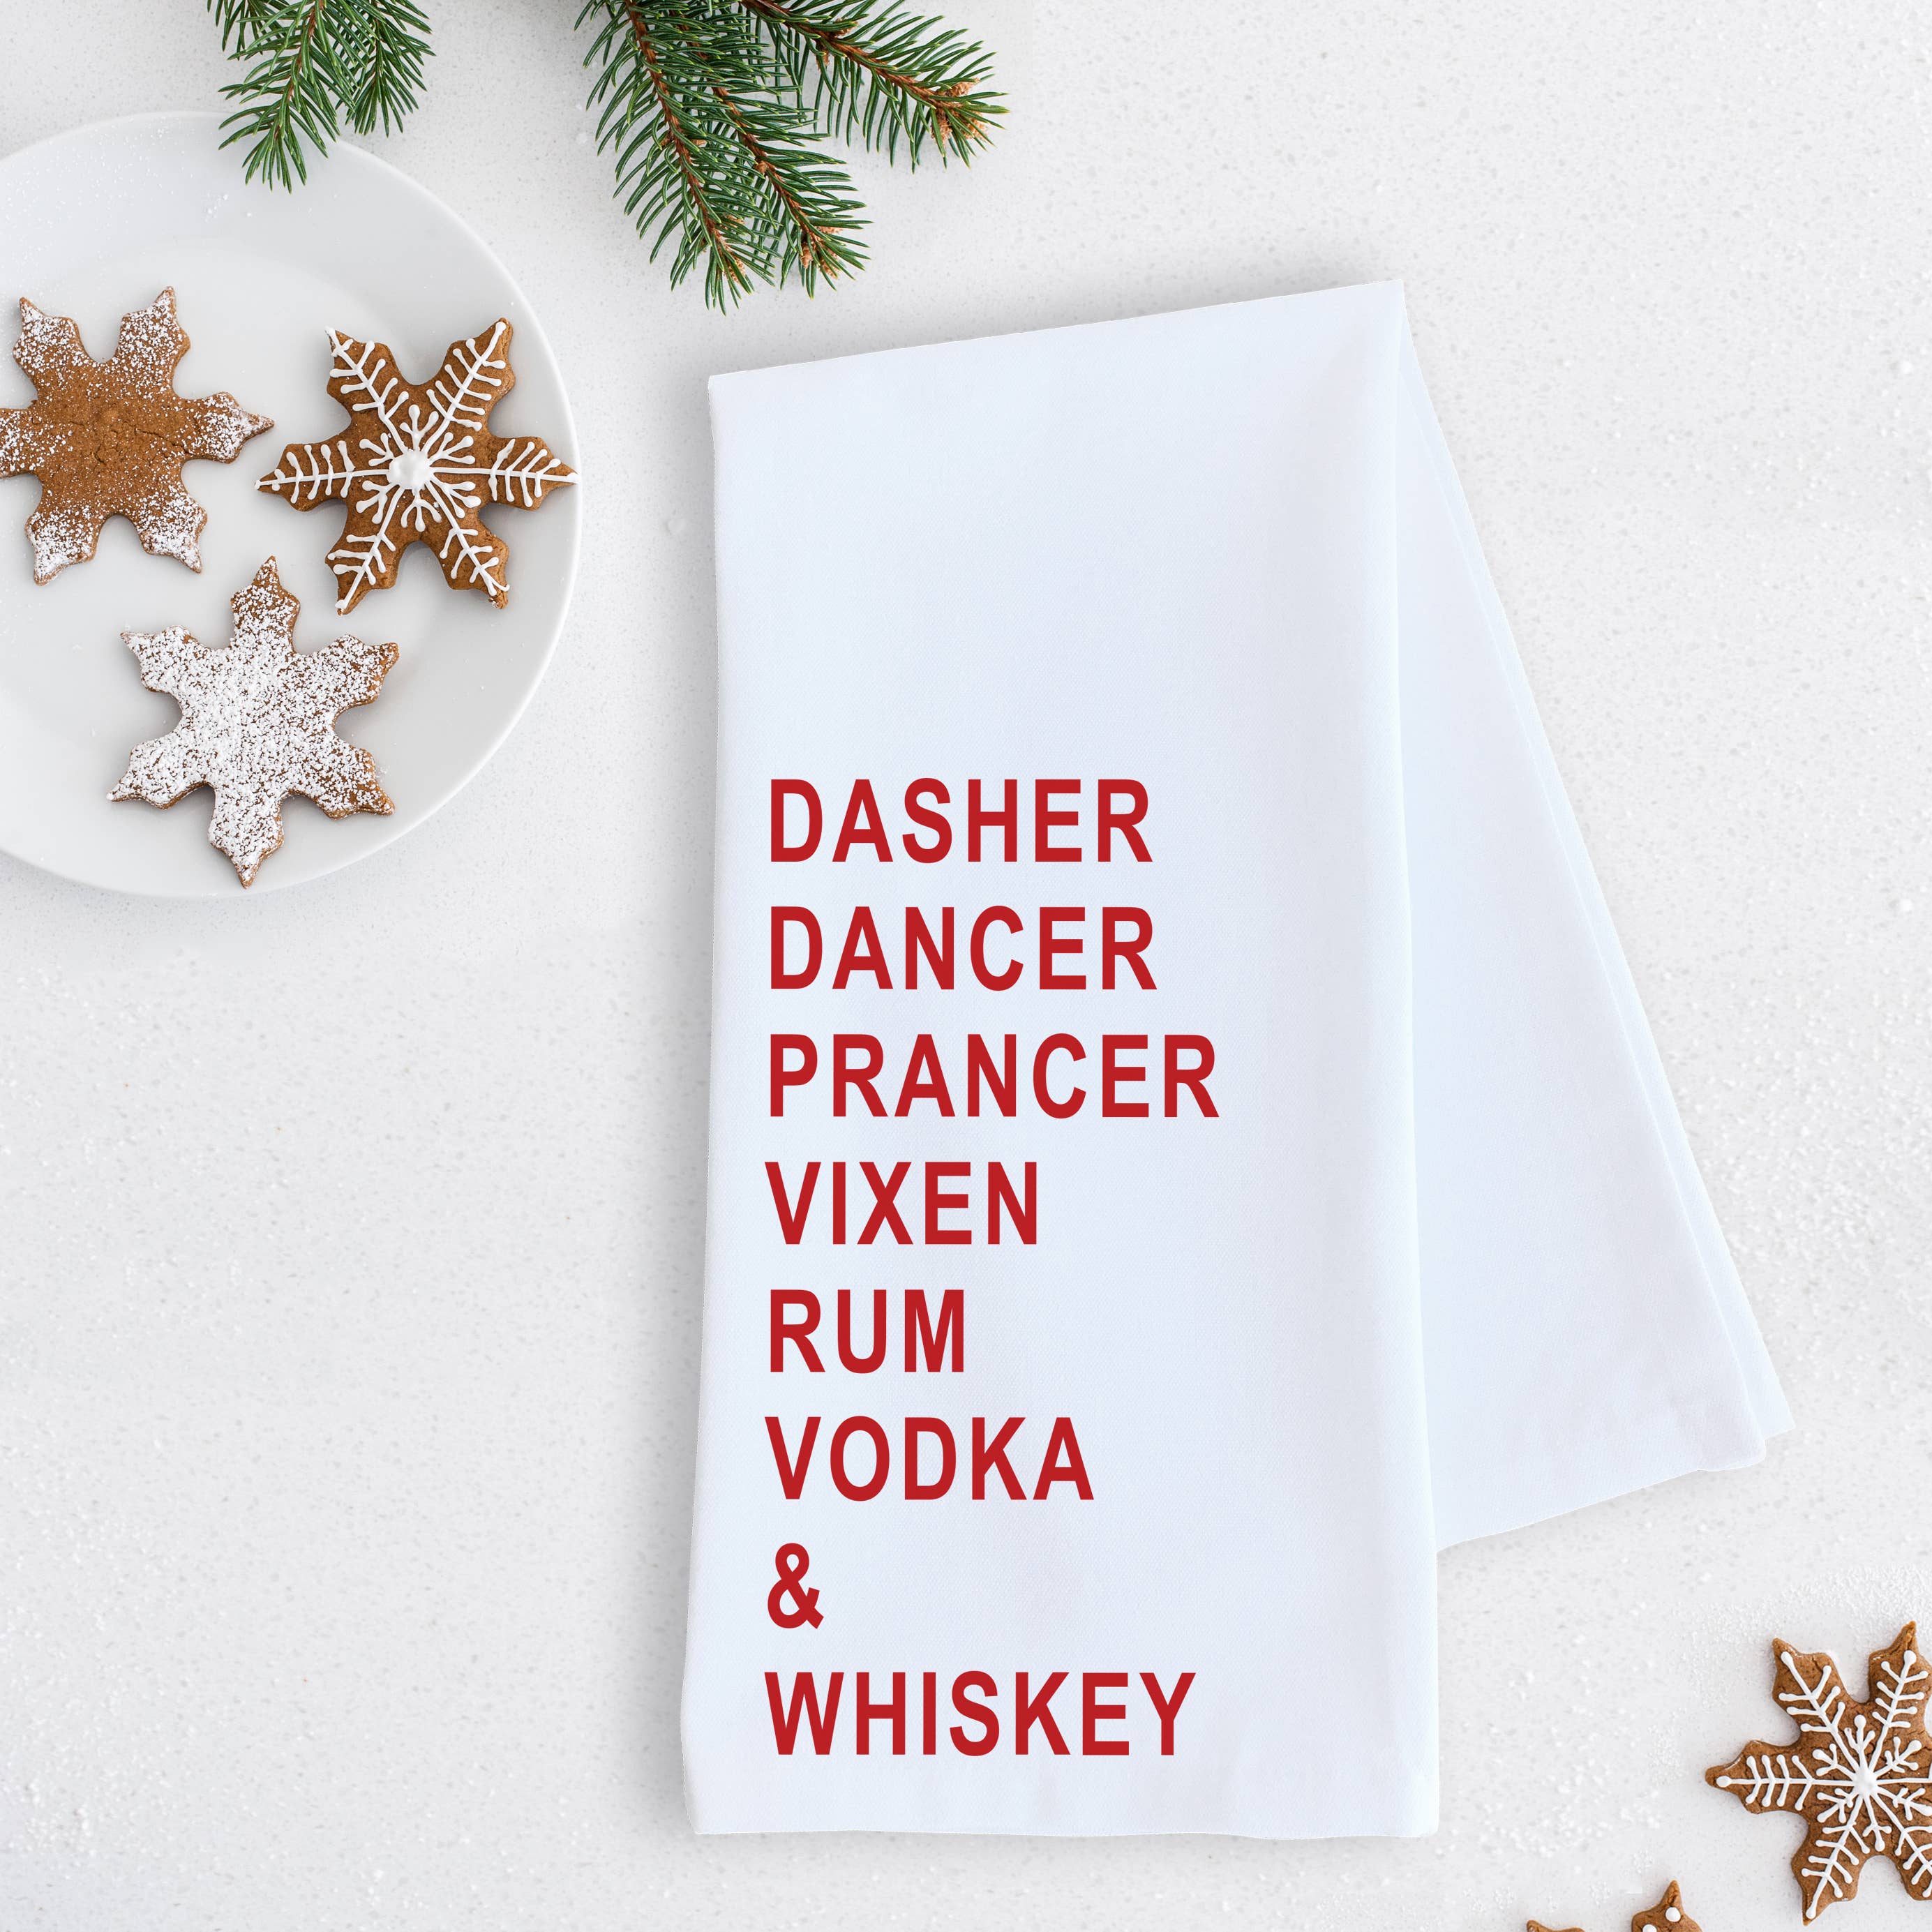 DEV D + CO. - Rum Vodka & Whiskey - Tea Towel - Holiday